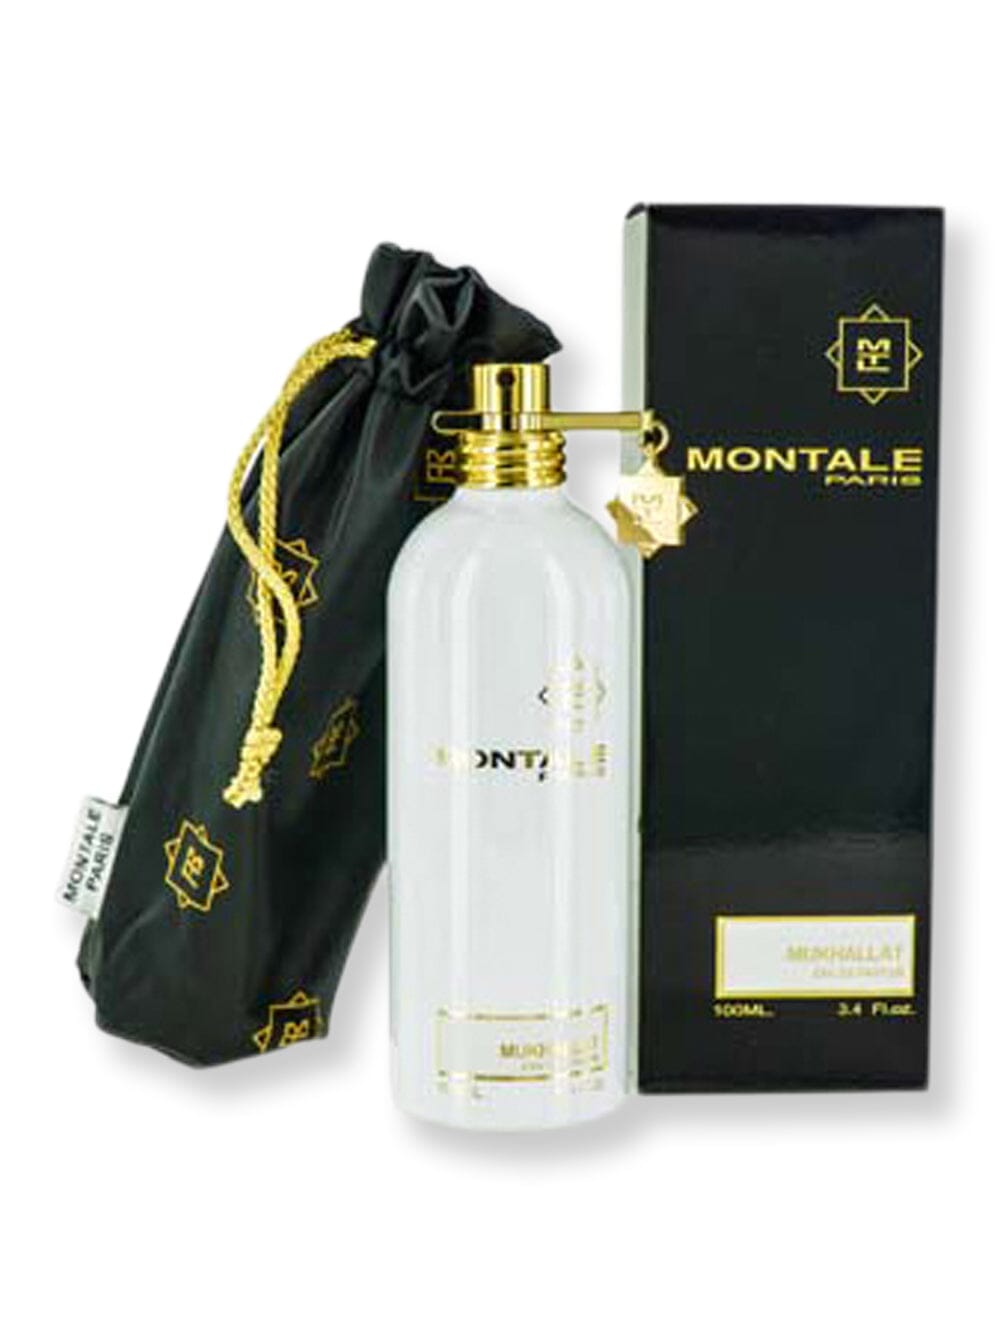 Montale Montale Mukhallat EDP Spray 3.4 oz100 ml Perfume 